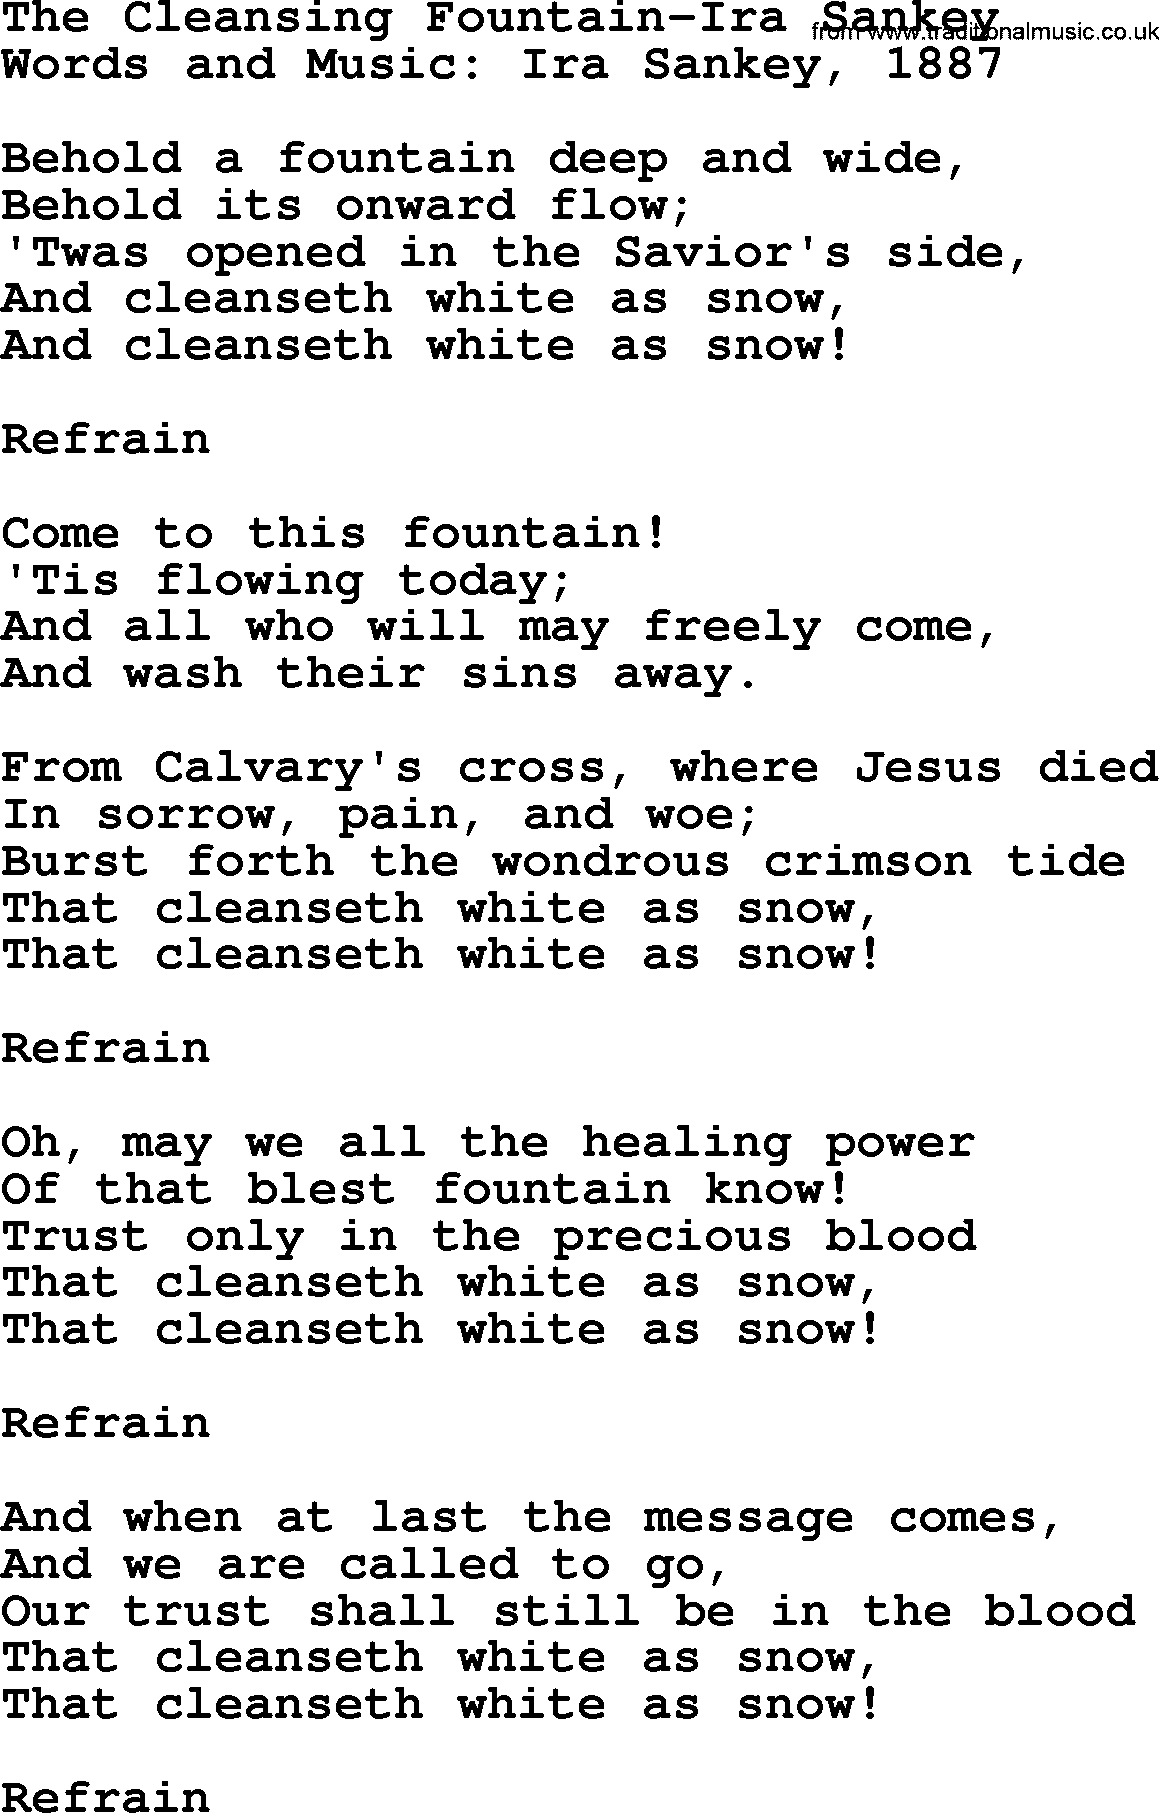 Ira Sankey hymn: The Cleansing Fountain-Ira Sankey, lyrics